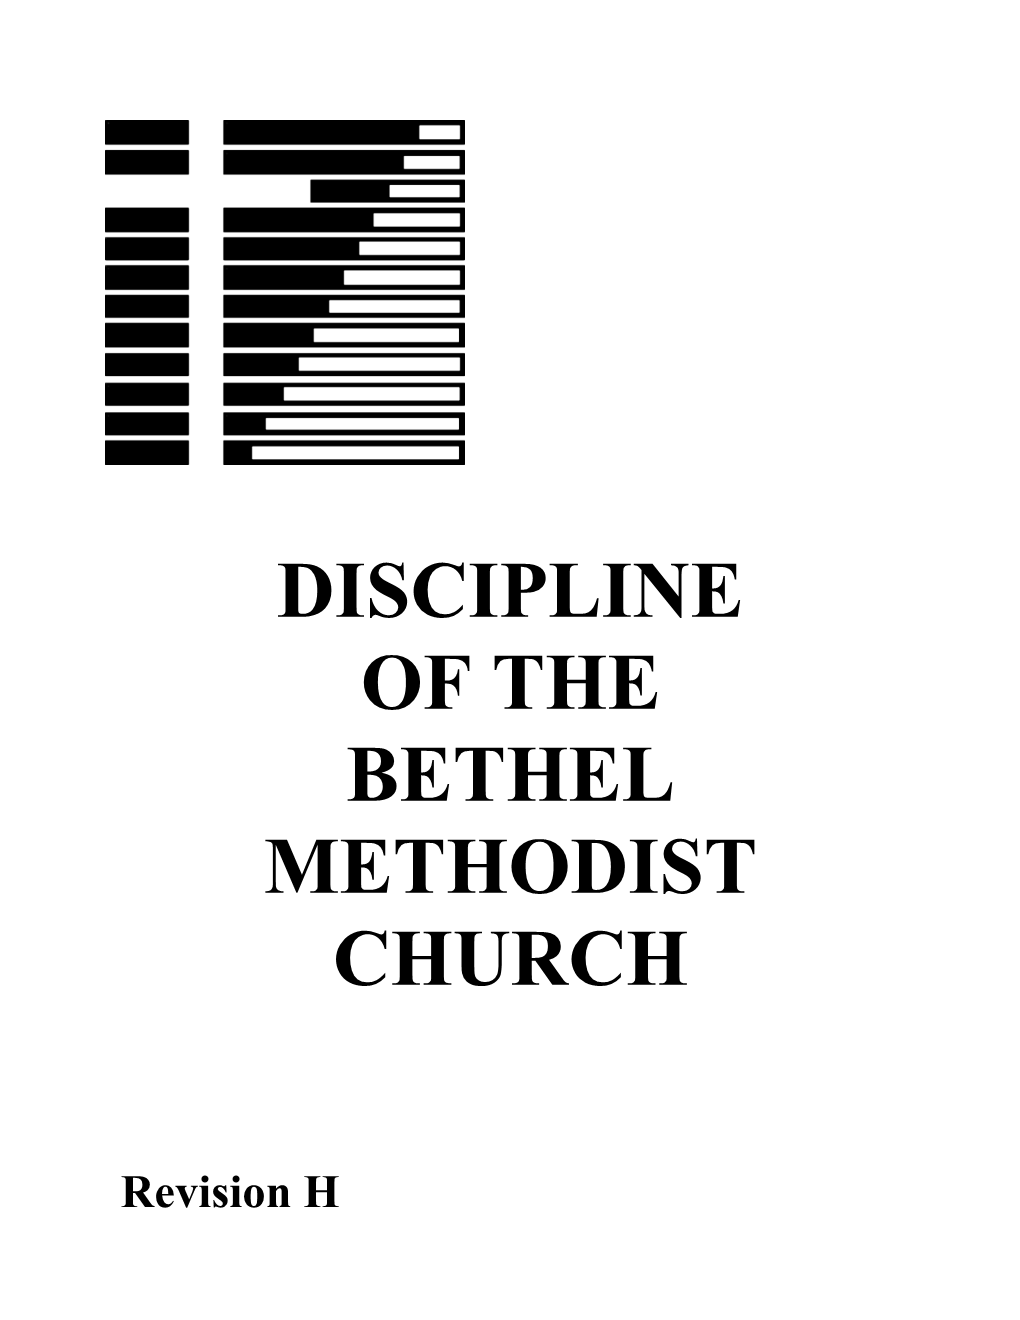 Discipline of the Bethel Methodist Church